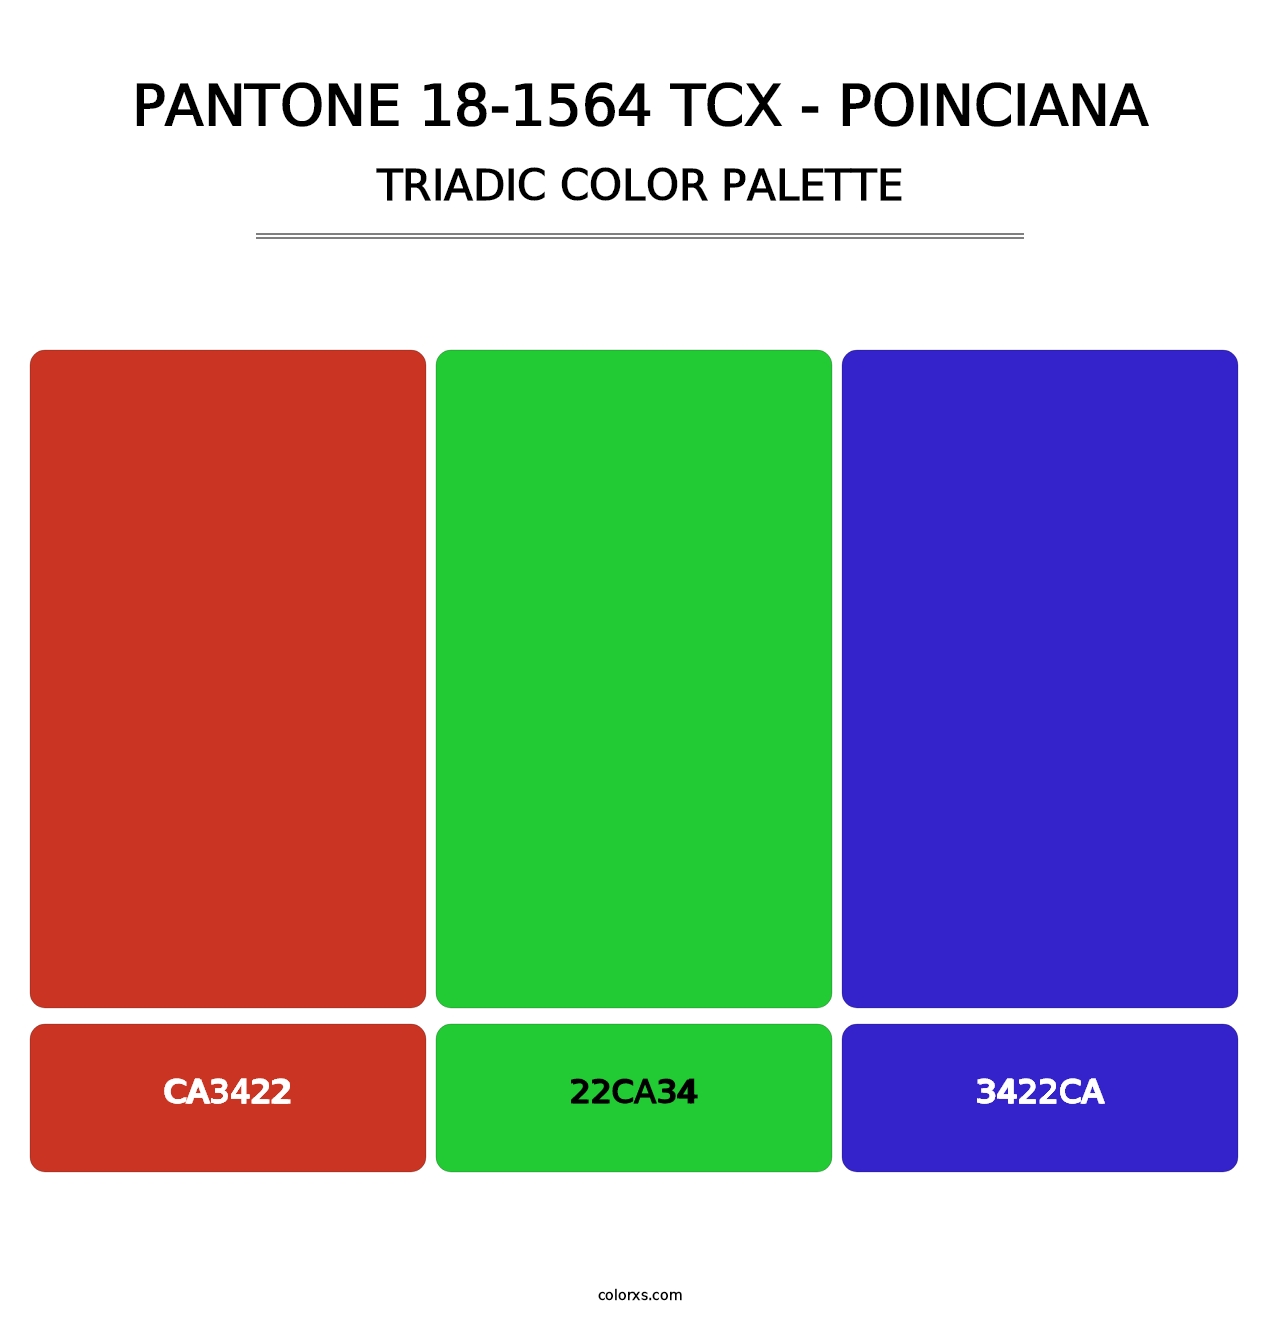 PANTONE 18-1564 TCX - Poinciana - Triadic Color Palette